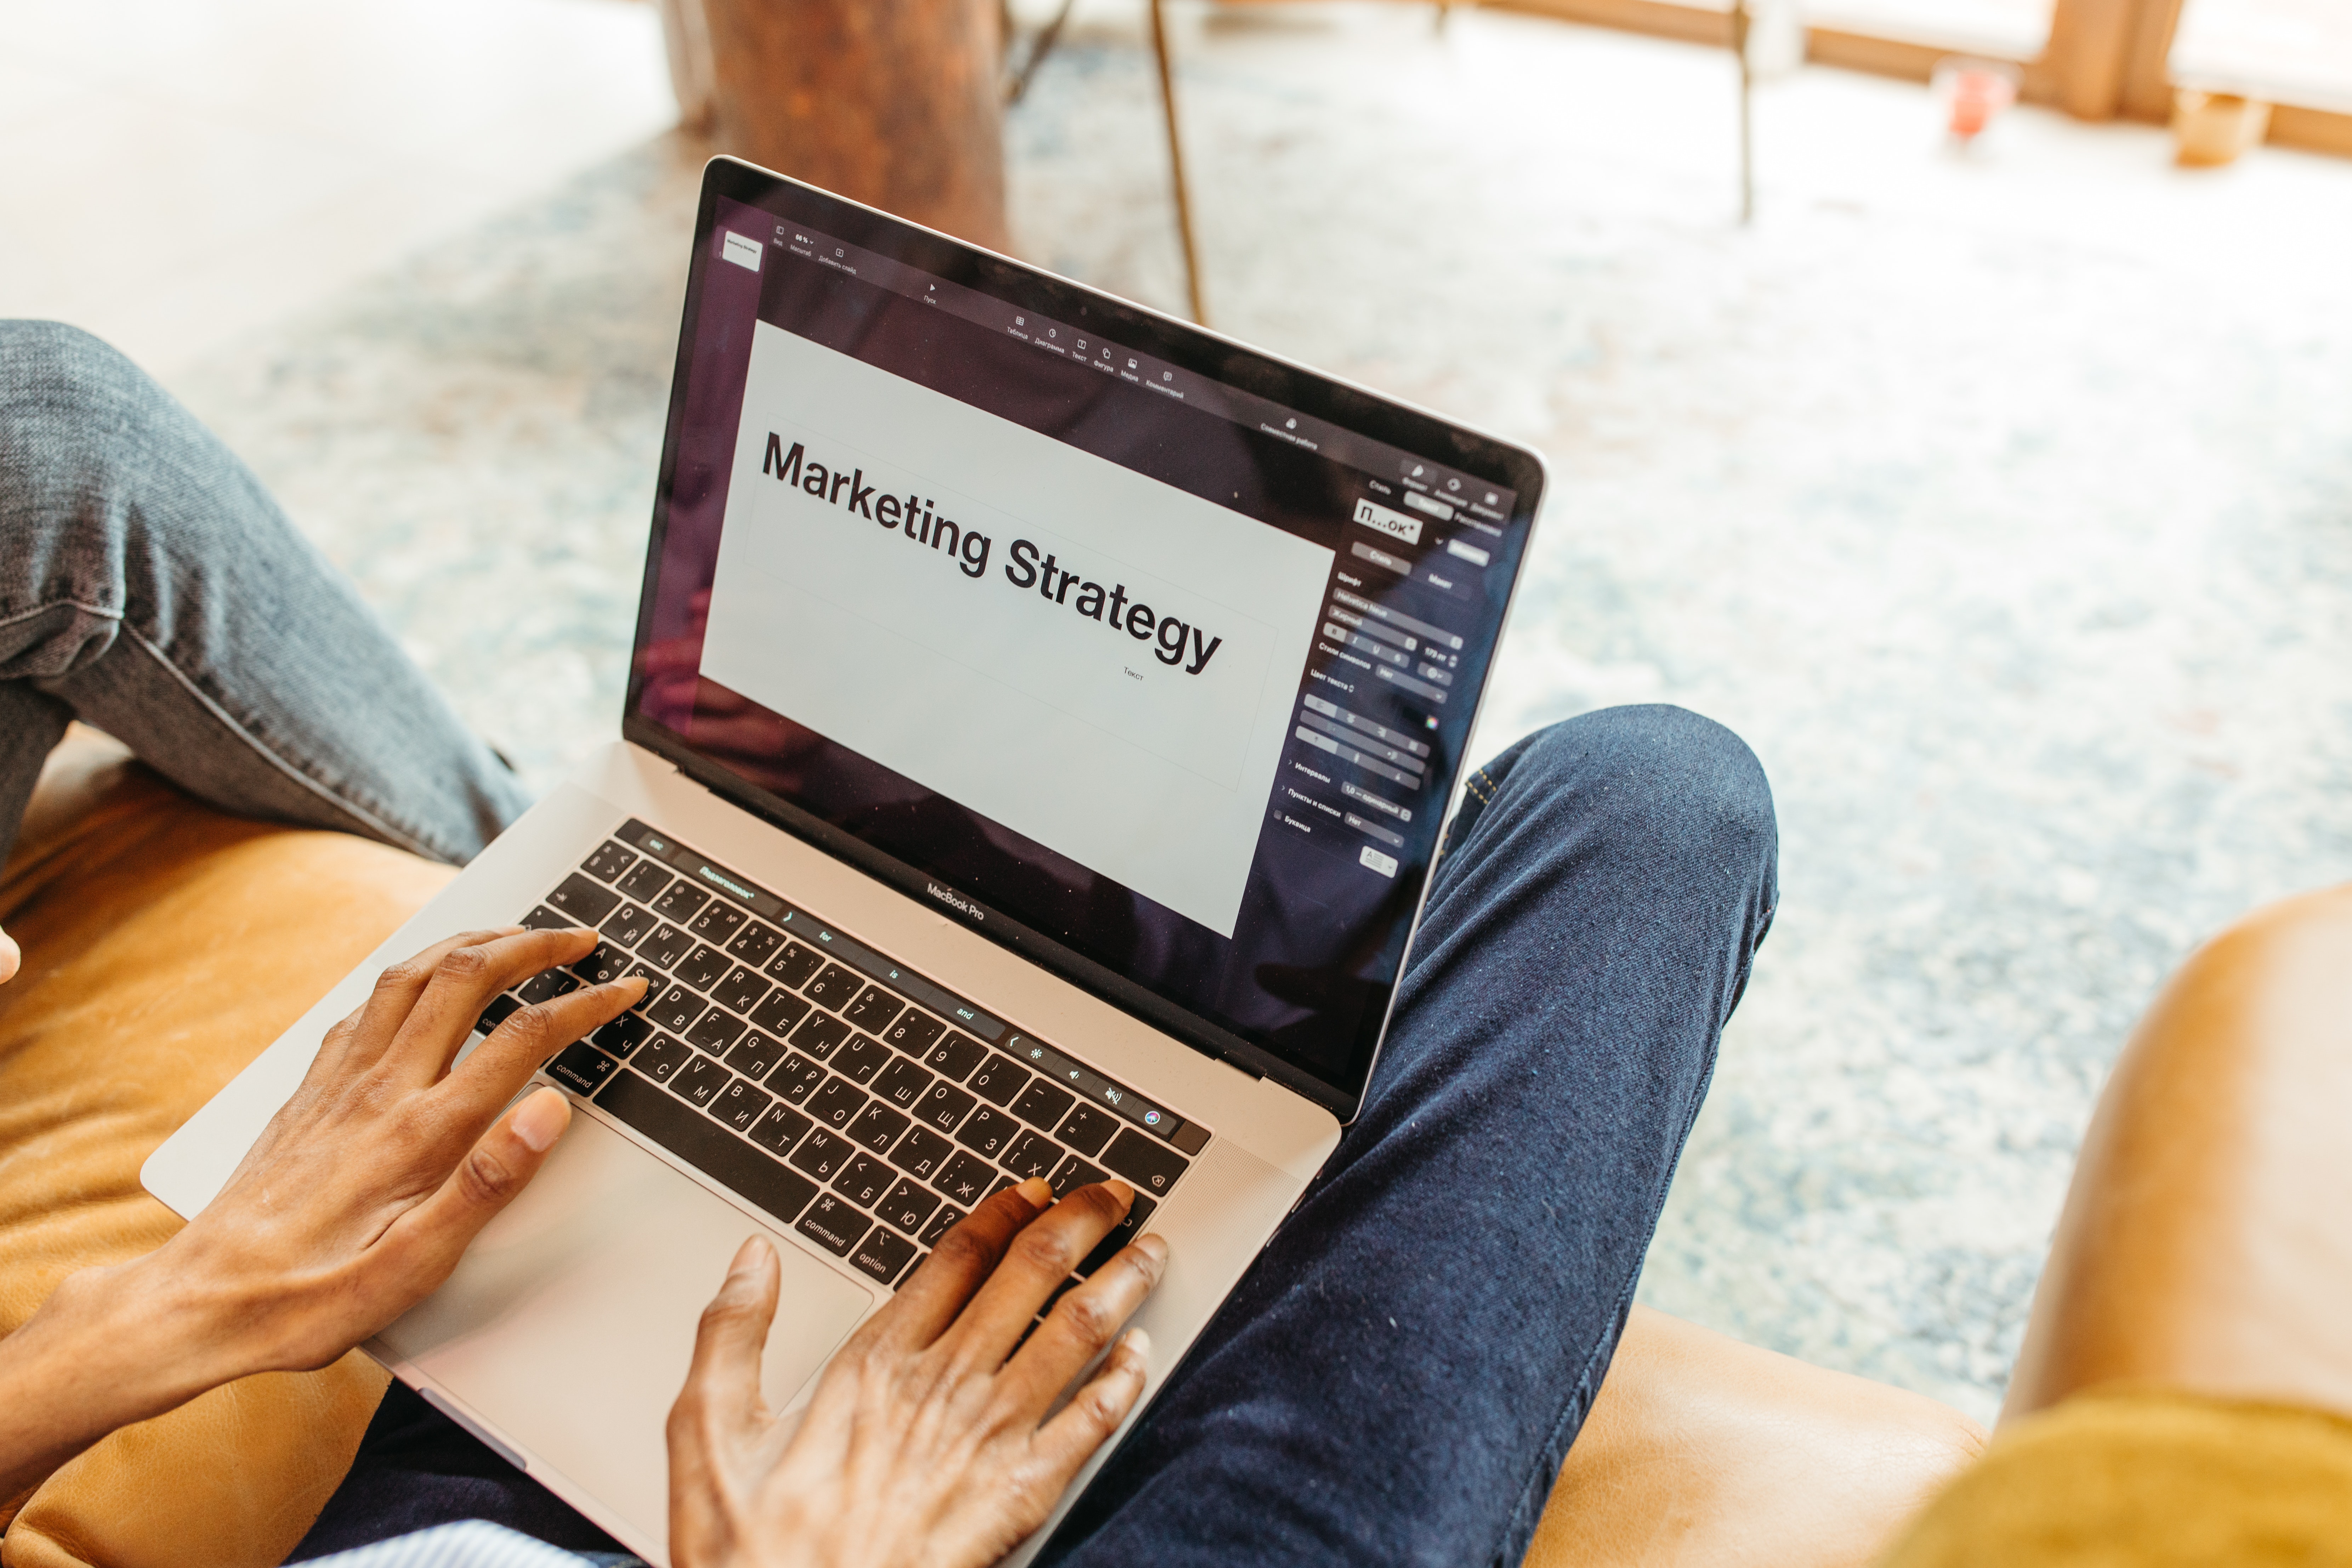 text marketing strategy on laptop